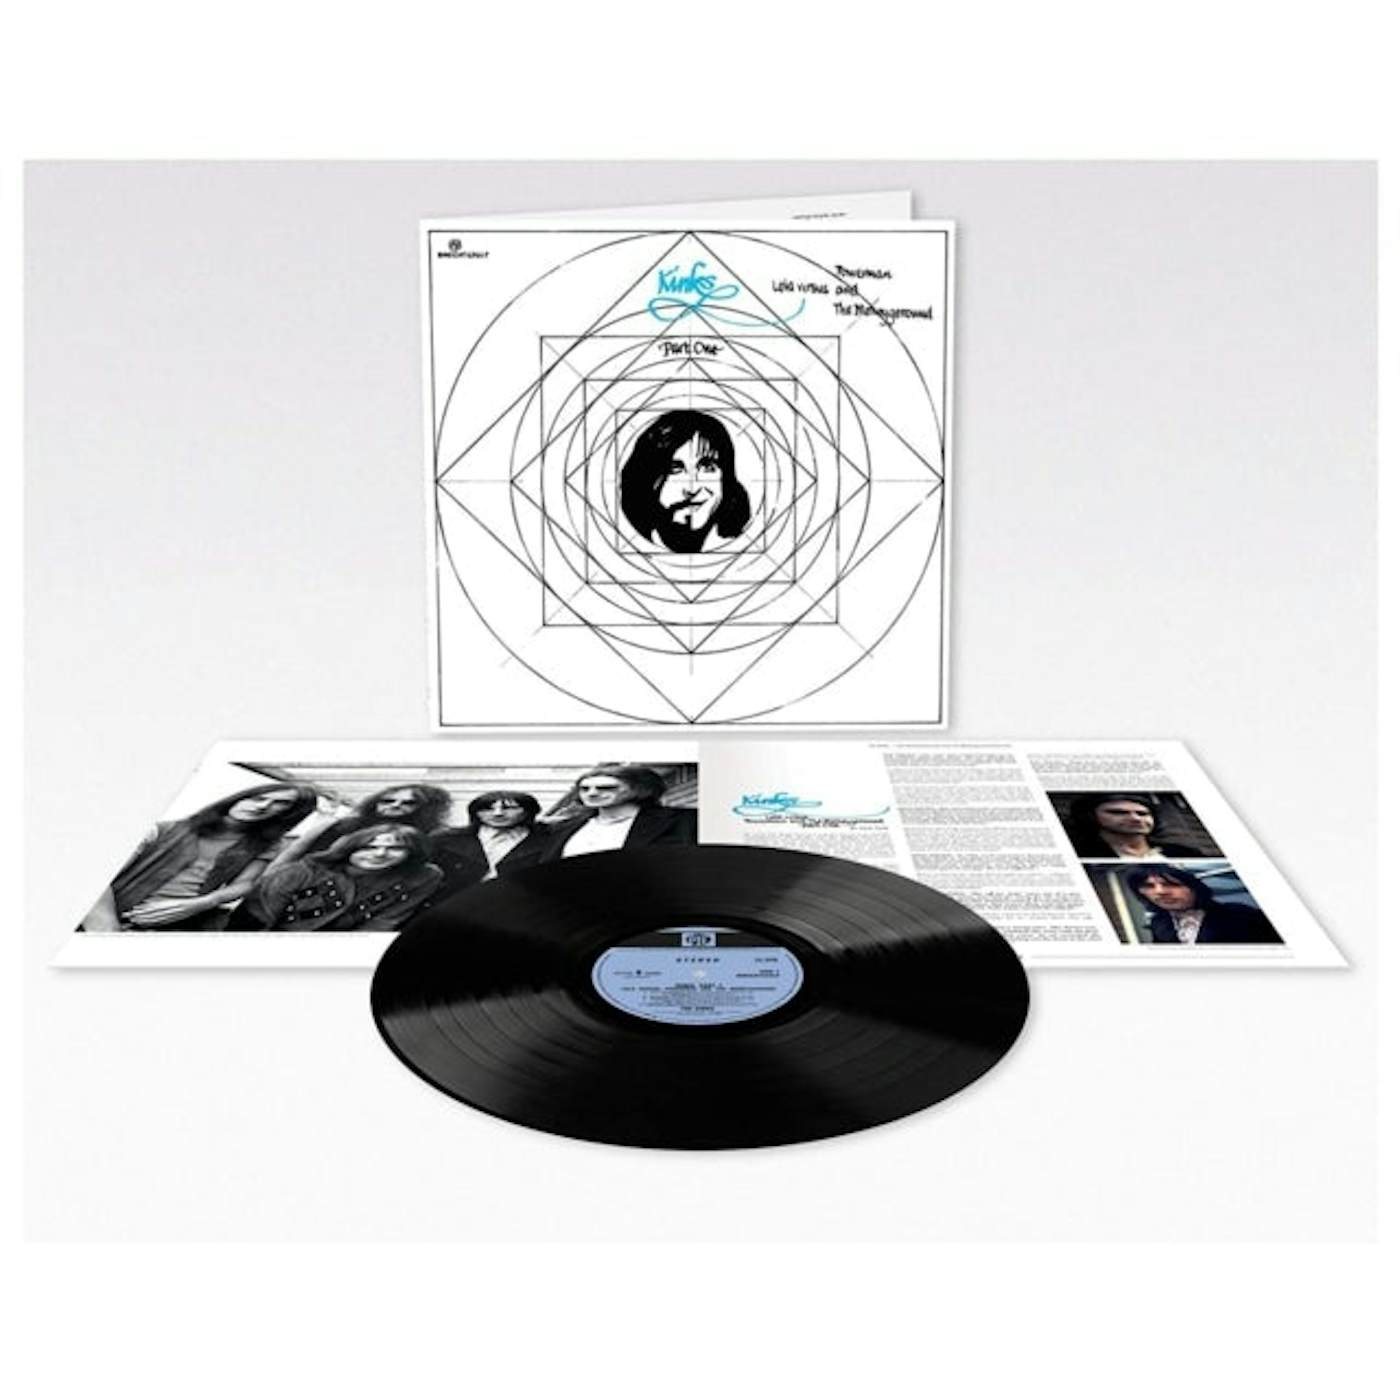 The Kinks LP Vinyl Record - Lola Versus Powerman And The Moneygoround. Pt. 1